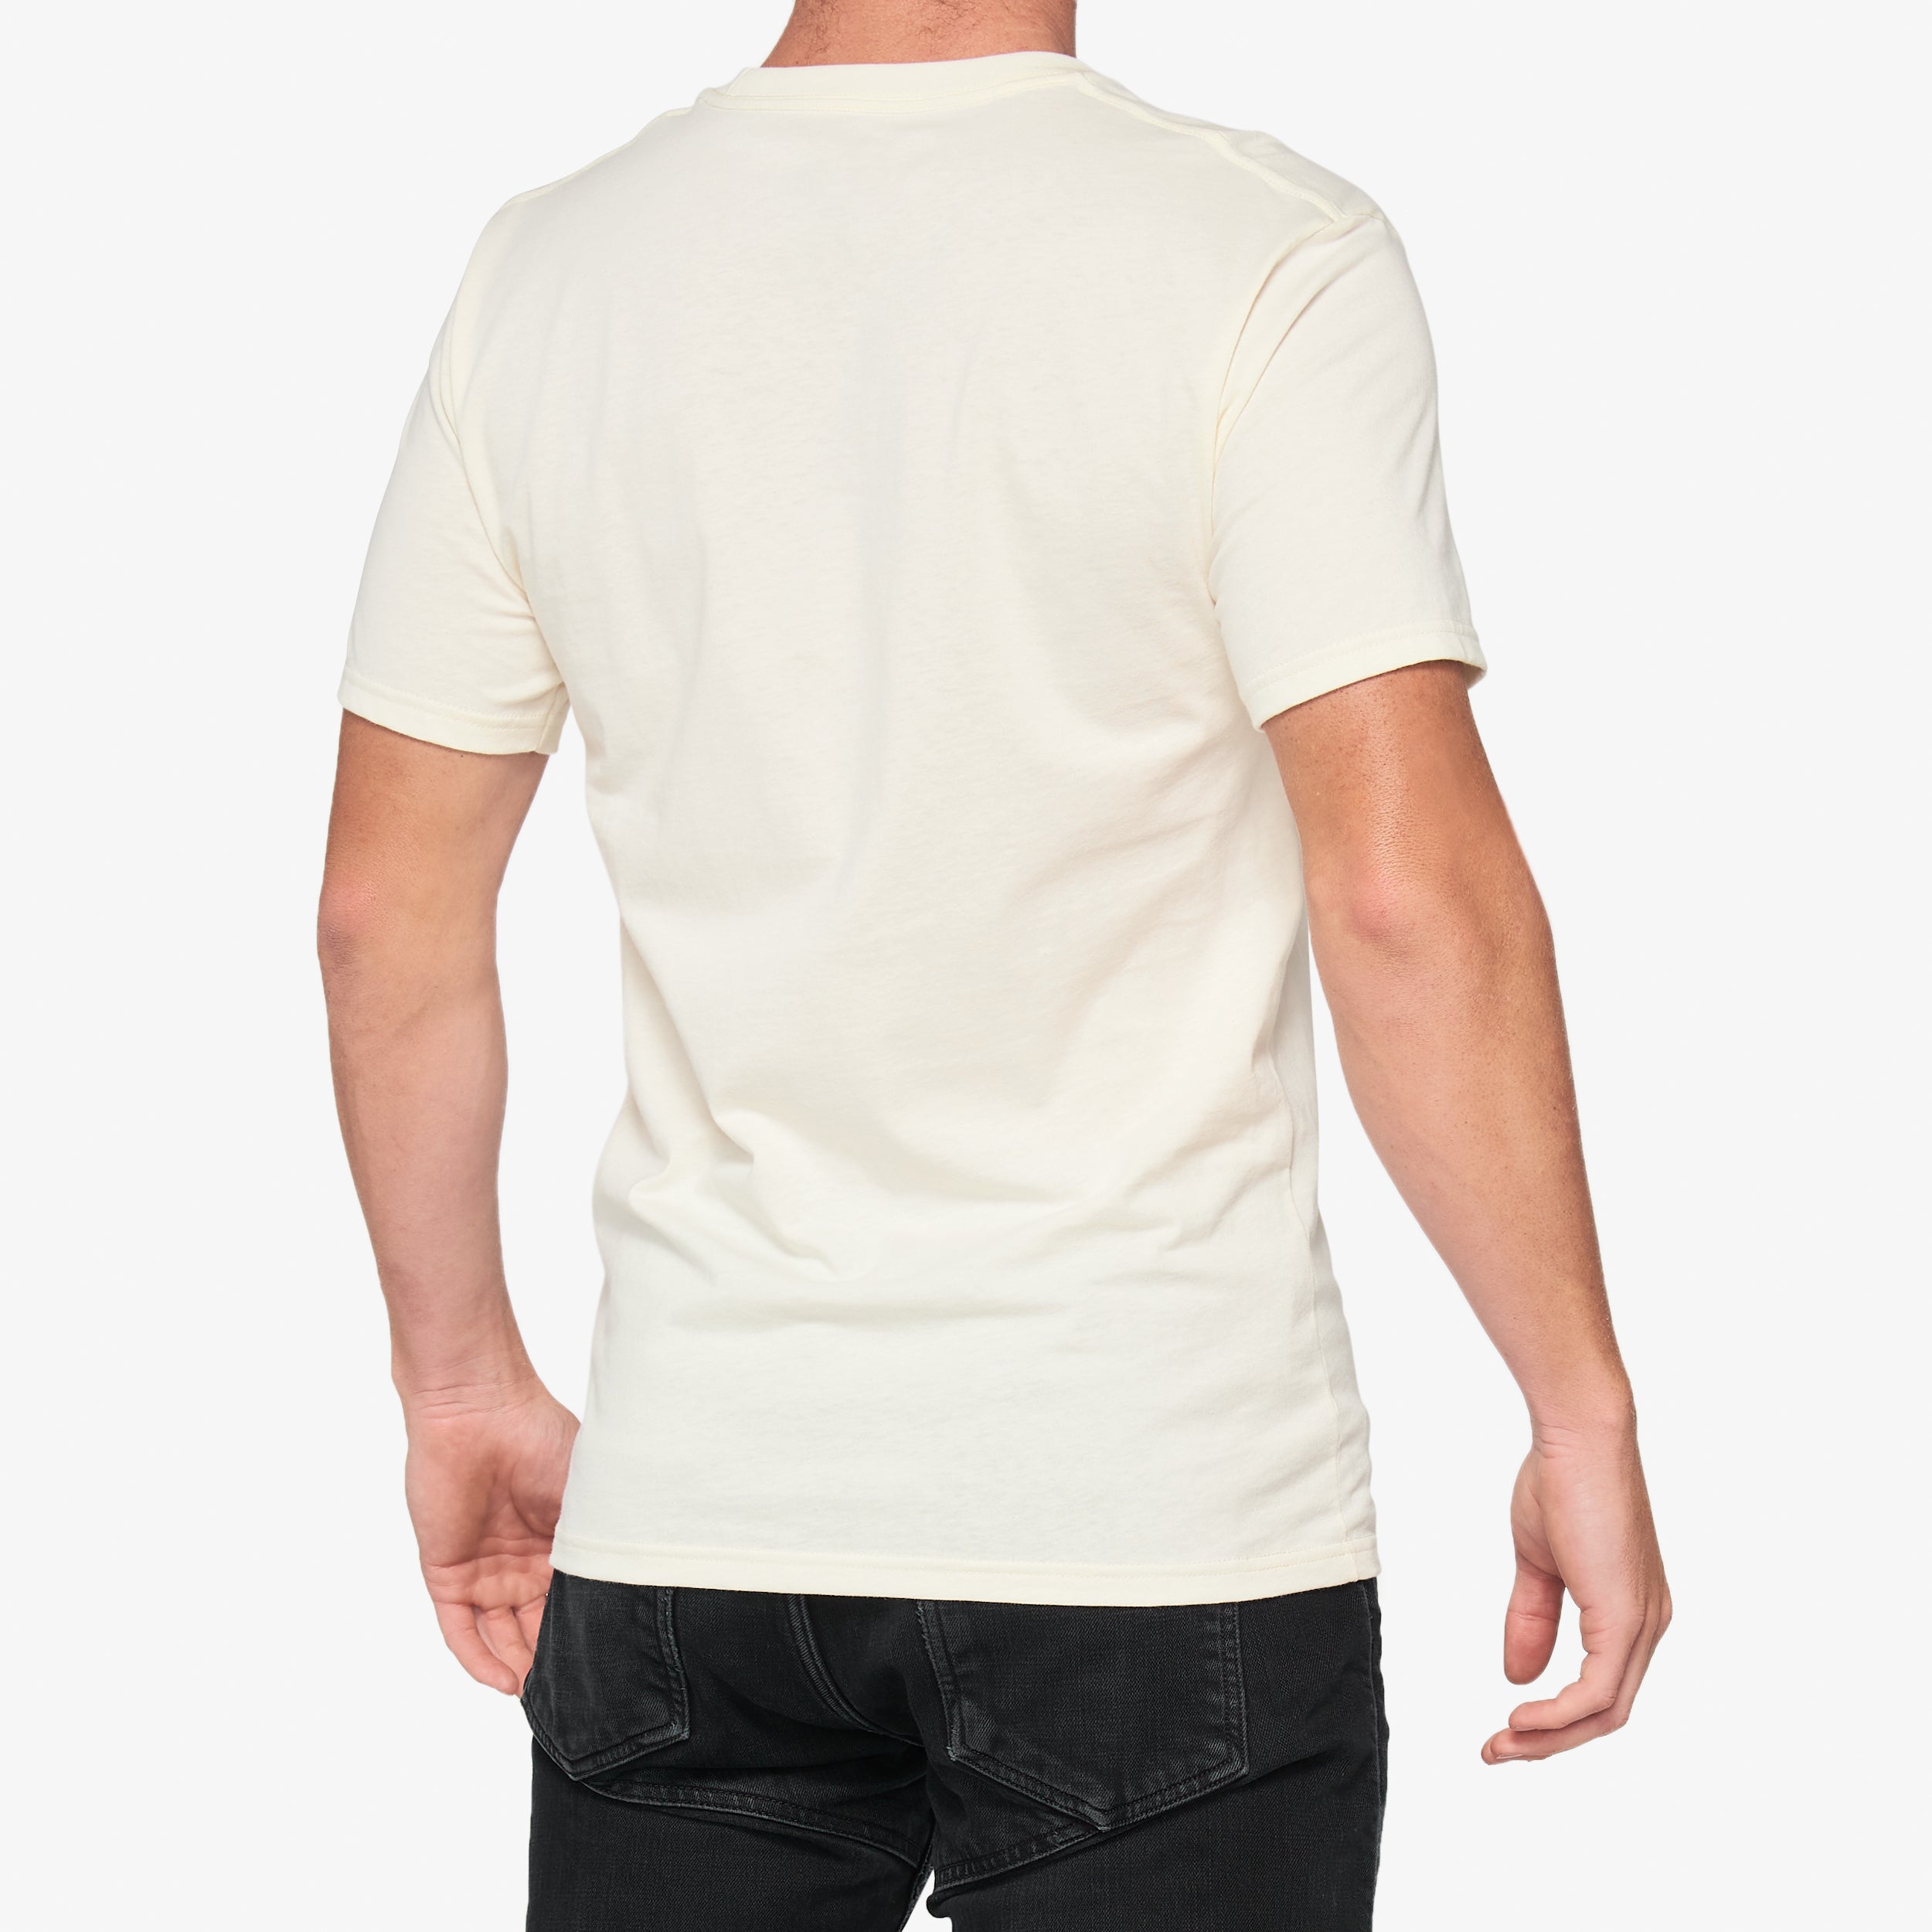 ESSENTIAL T-Shirt Chalk/Orange - Secondary